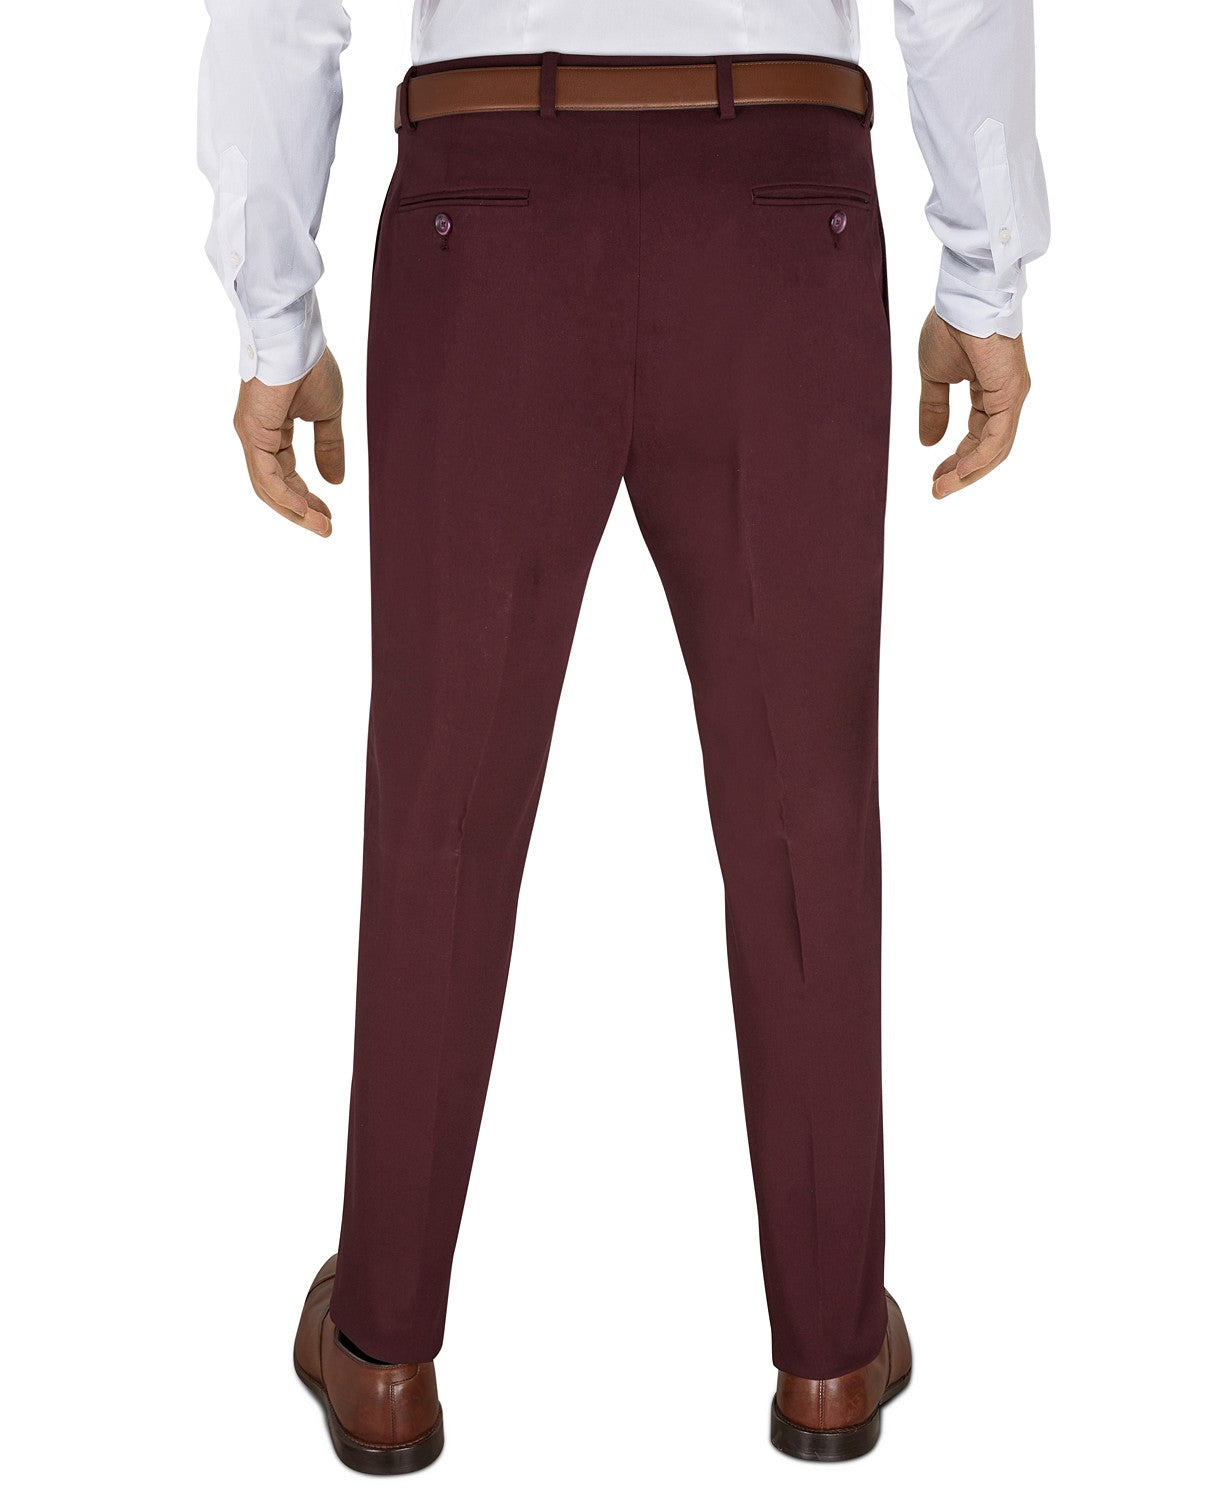 Tommy Hilfiger Mens Modern-Fit Stretch Performance Pants 32 x 30 Burgundy Wine